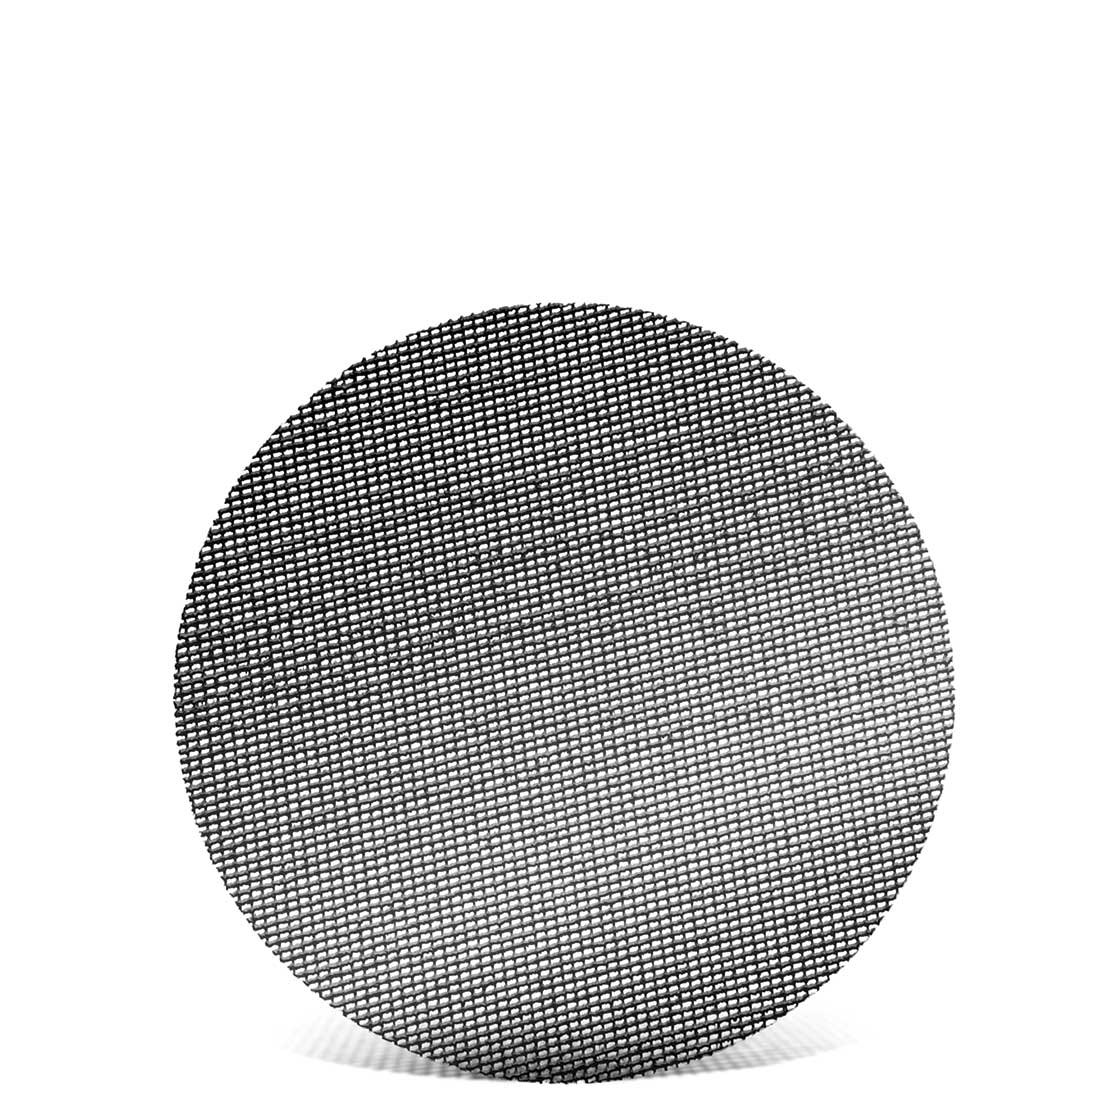 MENZER sanding meshes for orbital floor sanders, G60–220, Ø 375 mm / silicon carbide